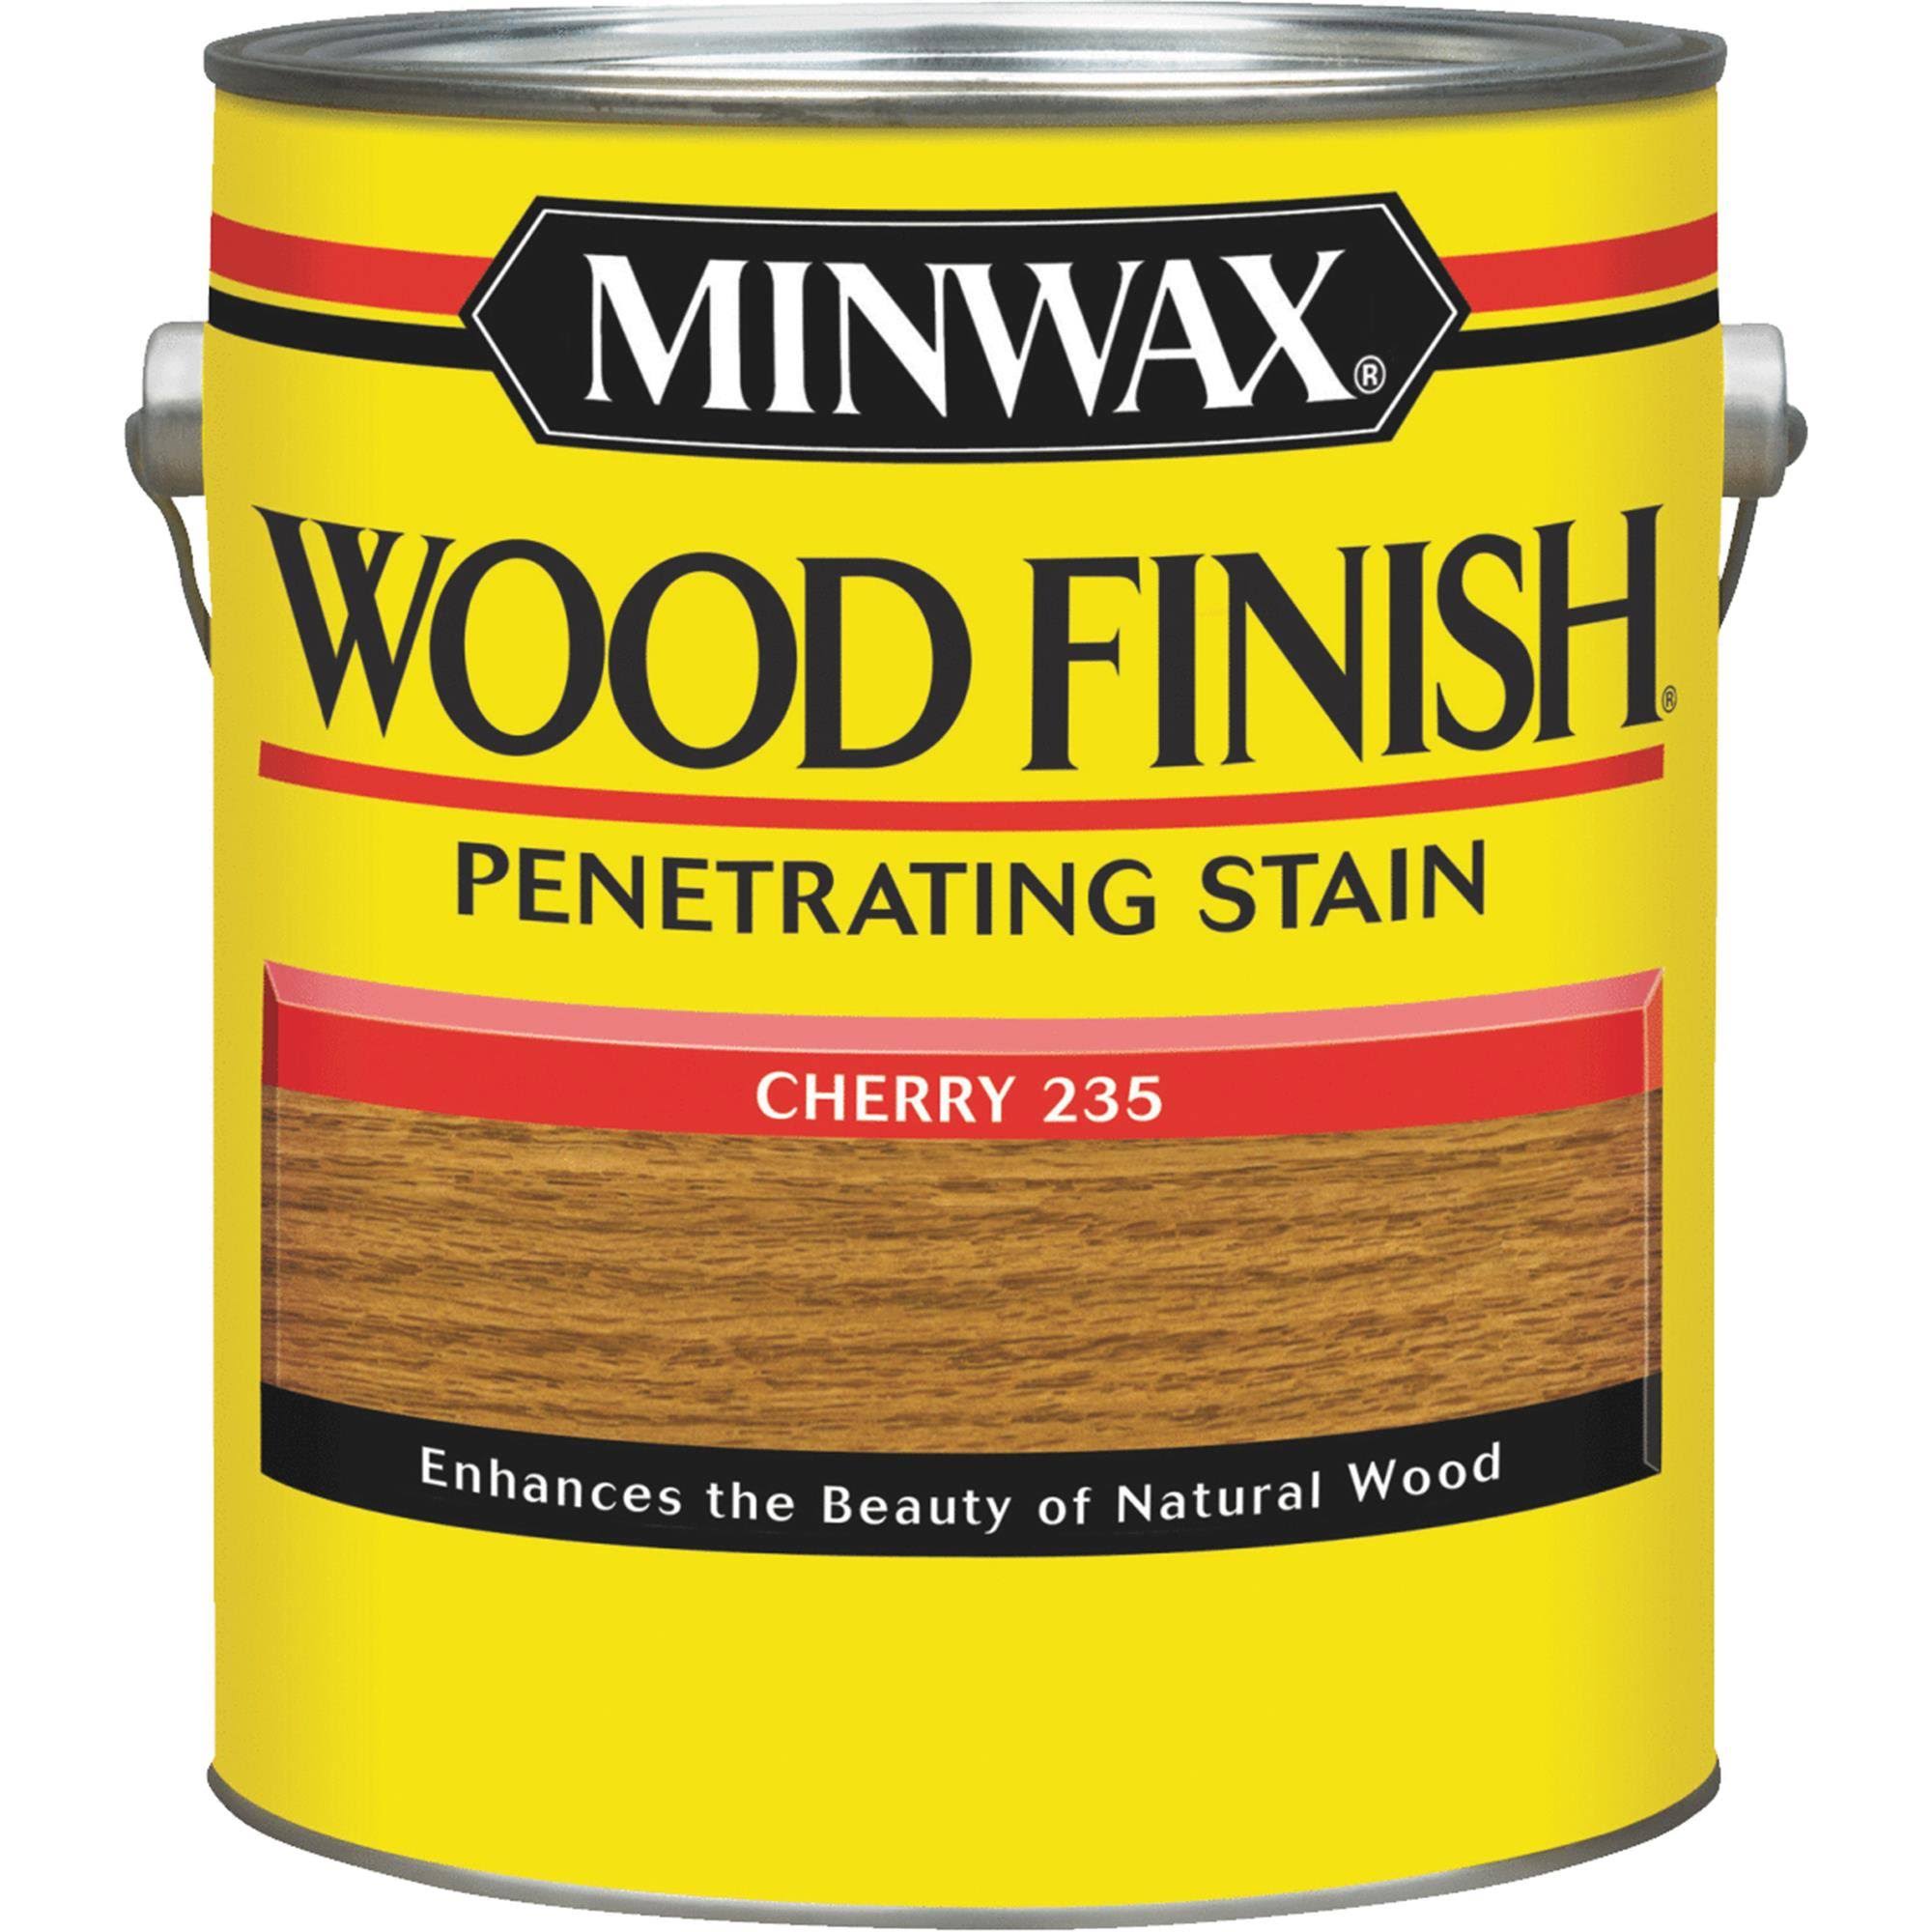 Minwax 71009000 Wood Finish Penetrating Stain - Cherry 235, 1gal